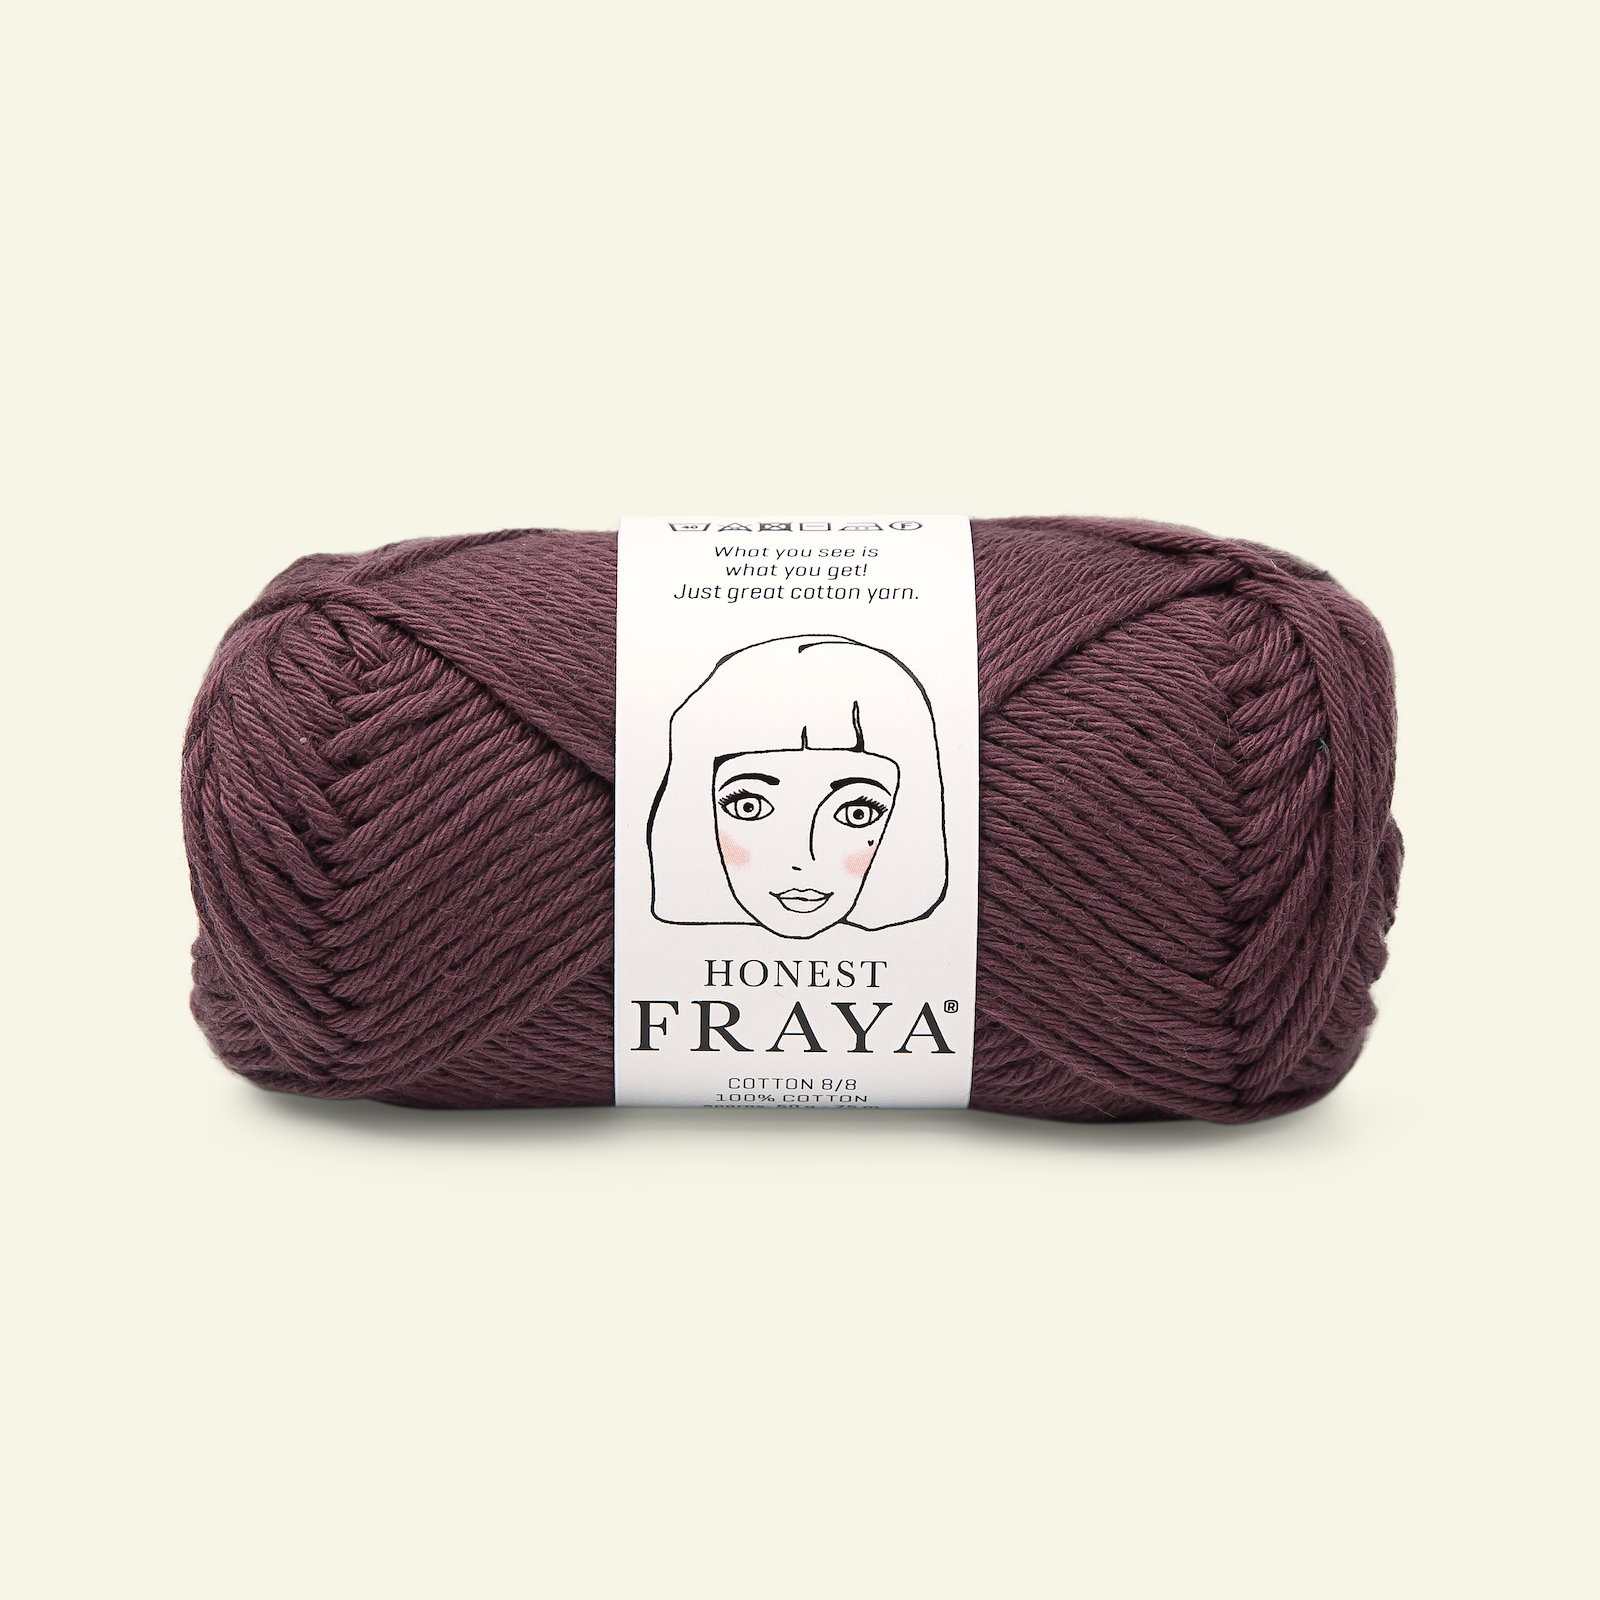 FRAYA, 100% cotton 8/8 yarn "Honest", aubergine 90061031_pack